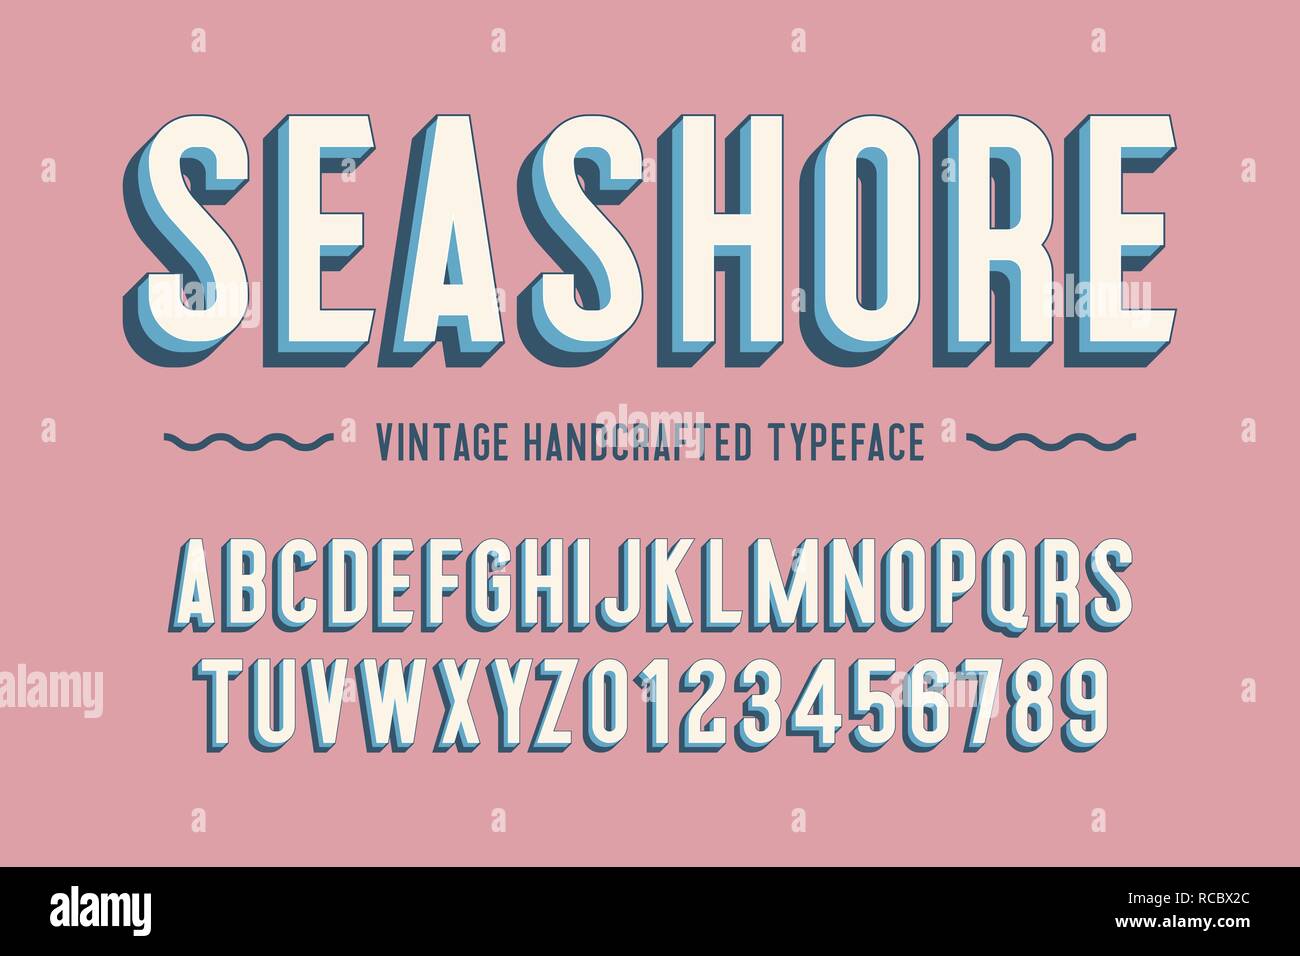 seashore vintage handcrafted 3d alphabet. vector illustration Stock Vector